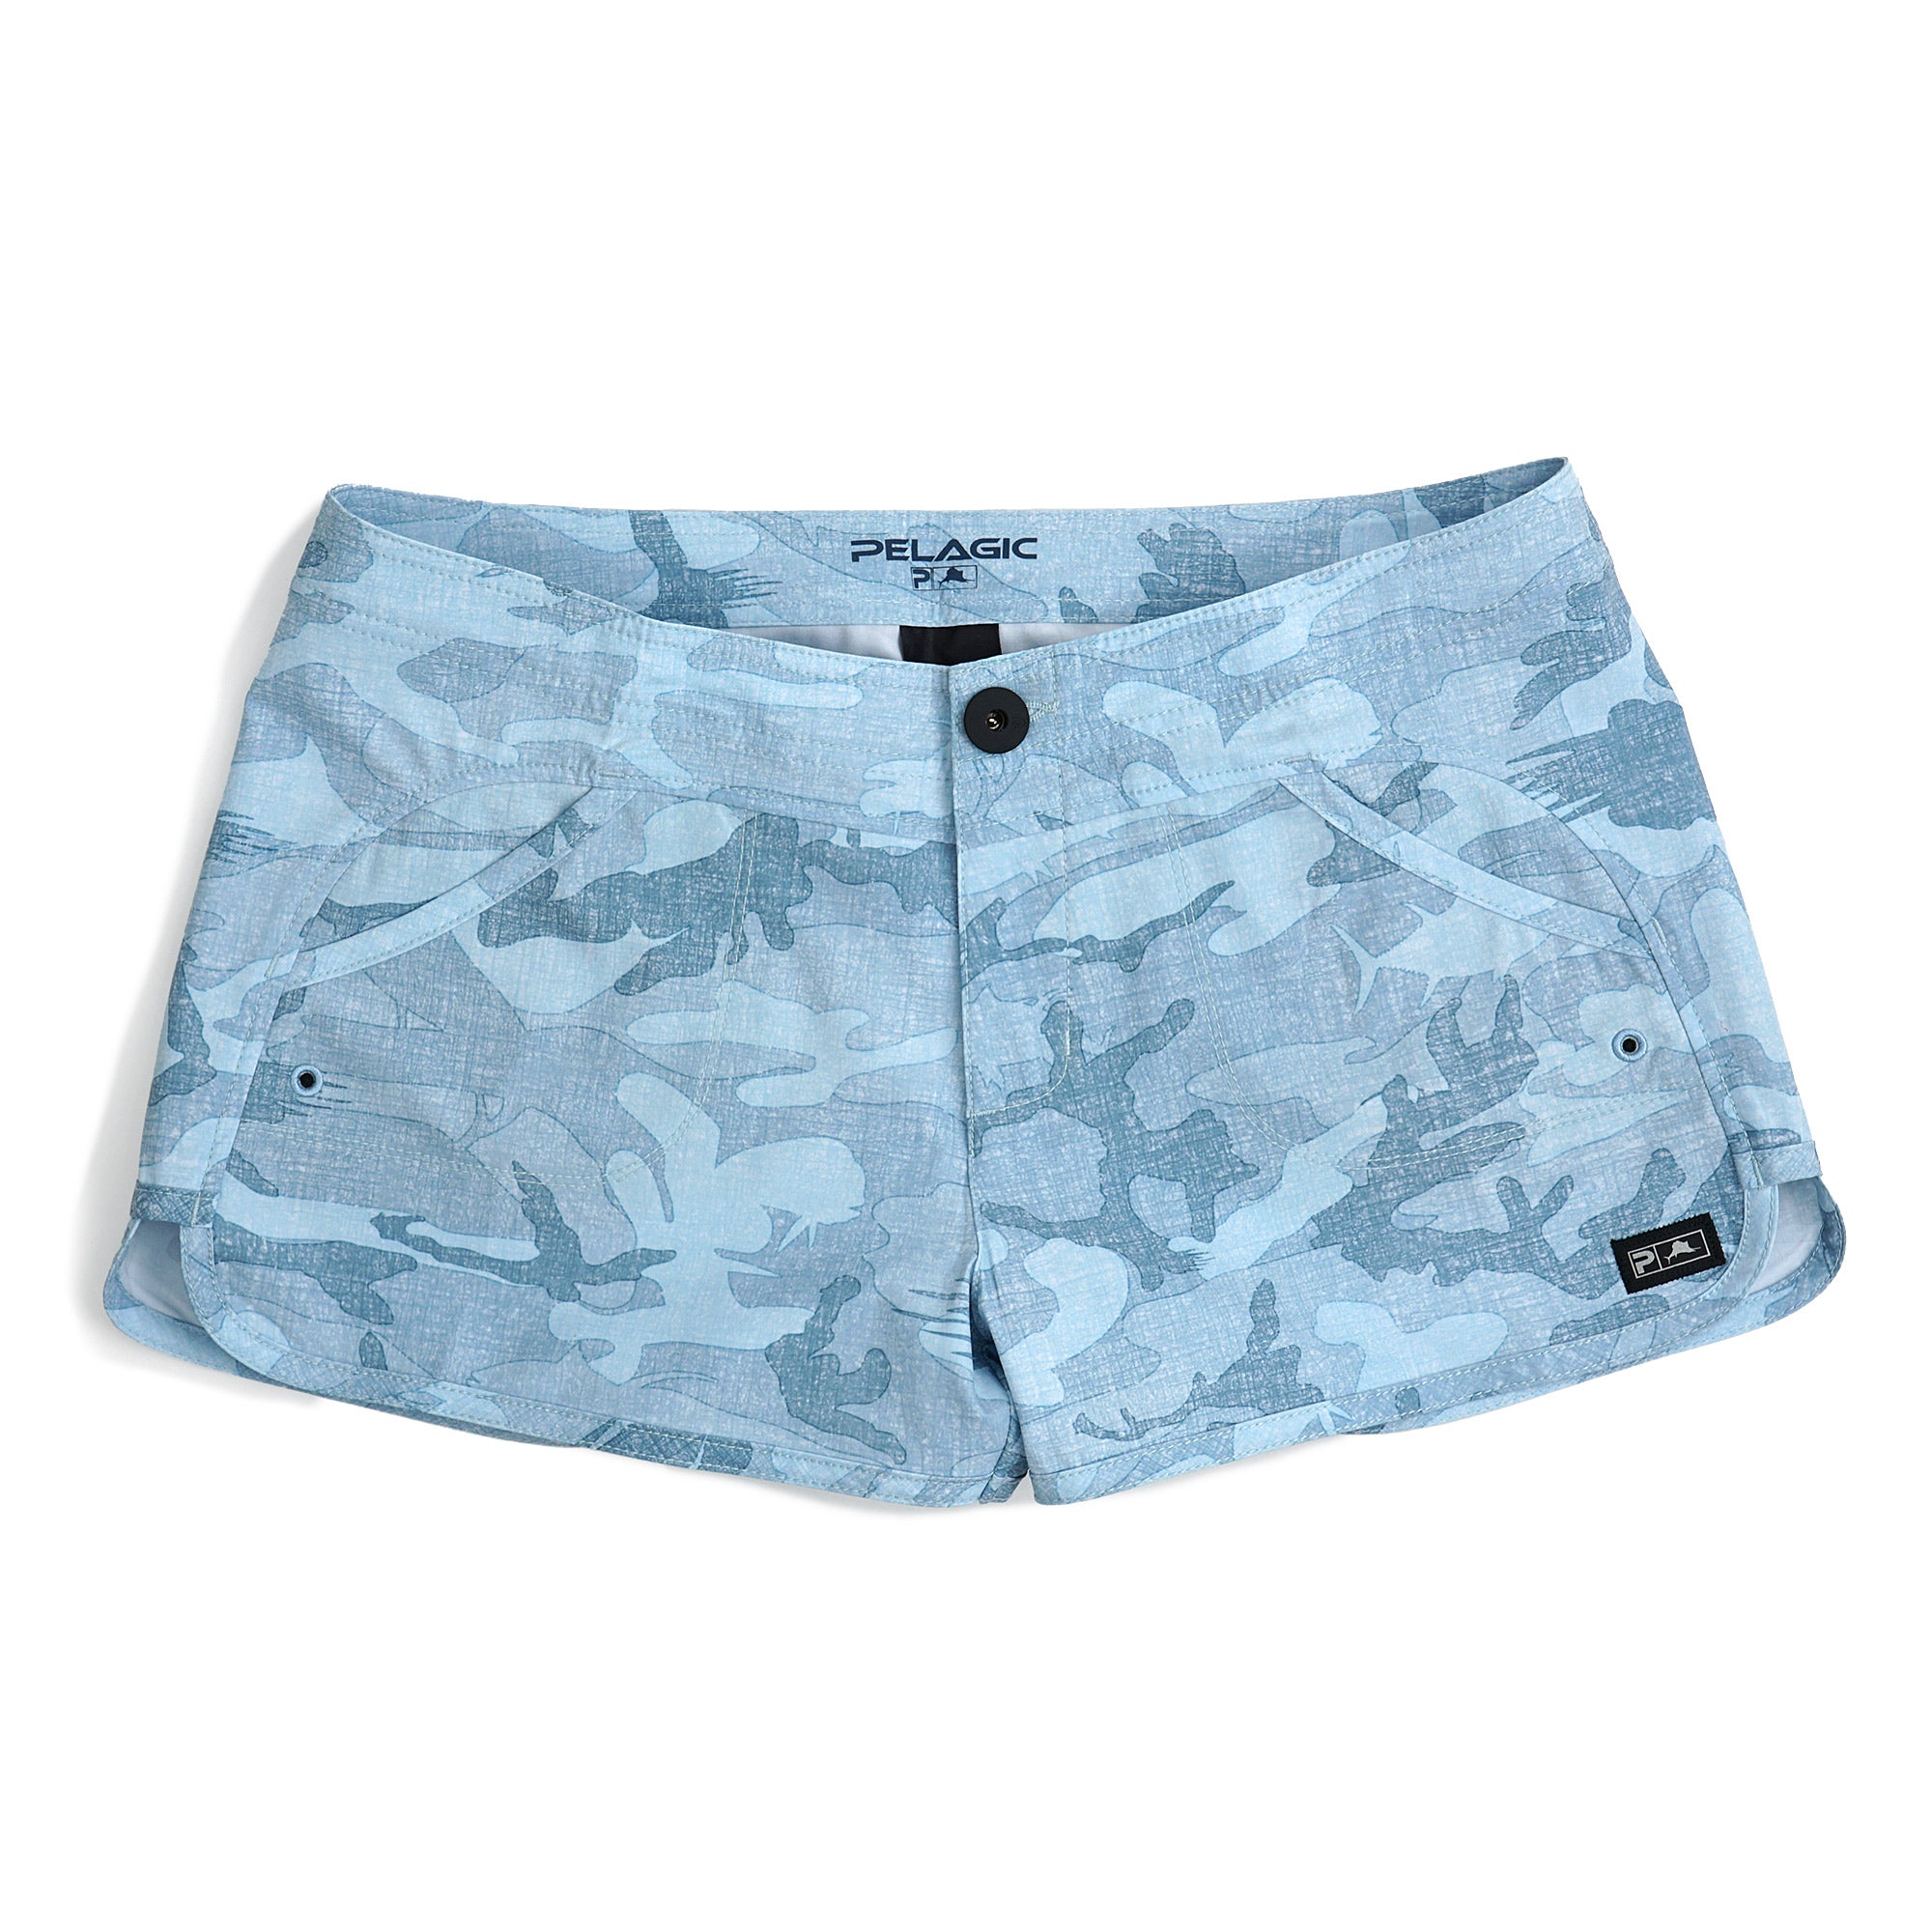 Pelagic Hybrid Shorts - Moana Fish Camo - Slate 10